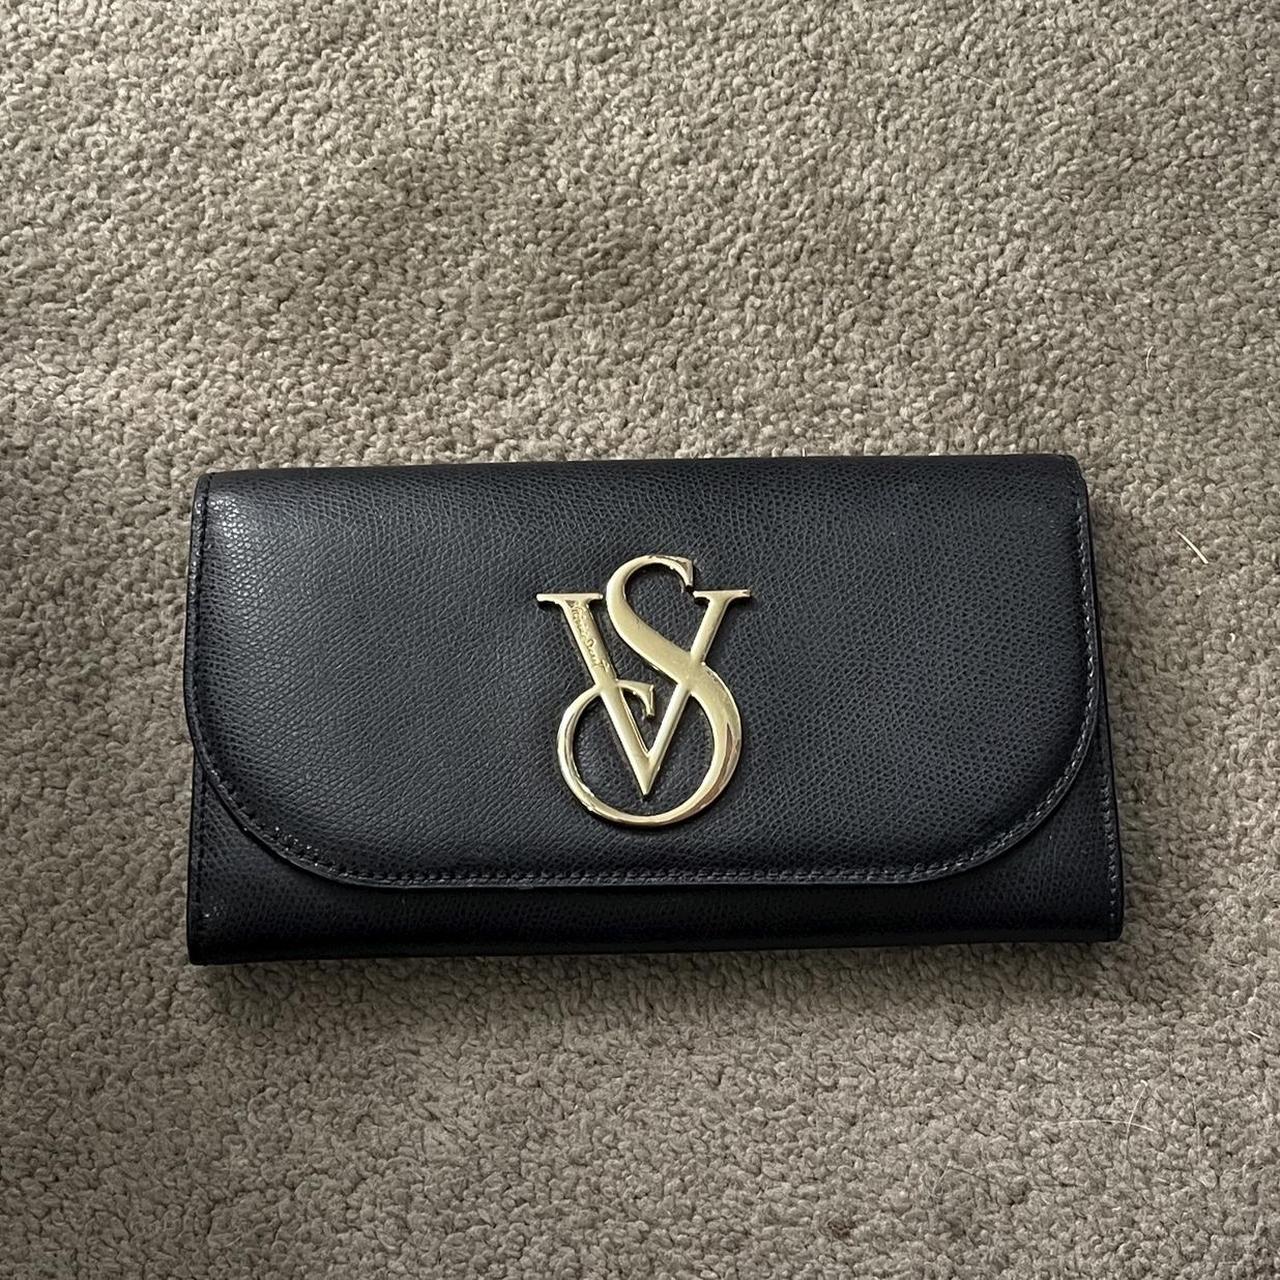 Victoria Secret black wallet - Genuine... - Depop